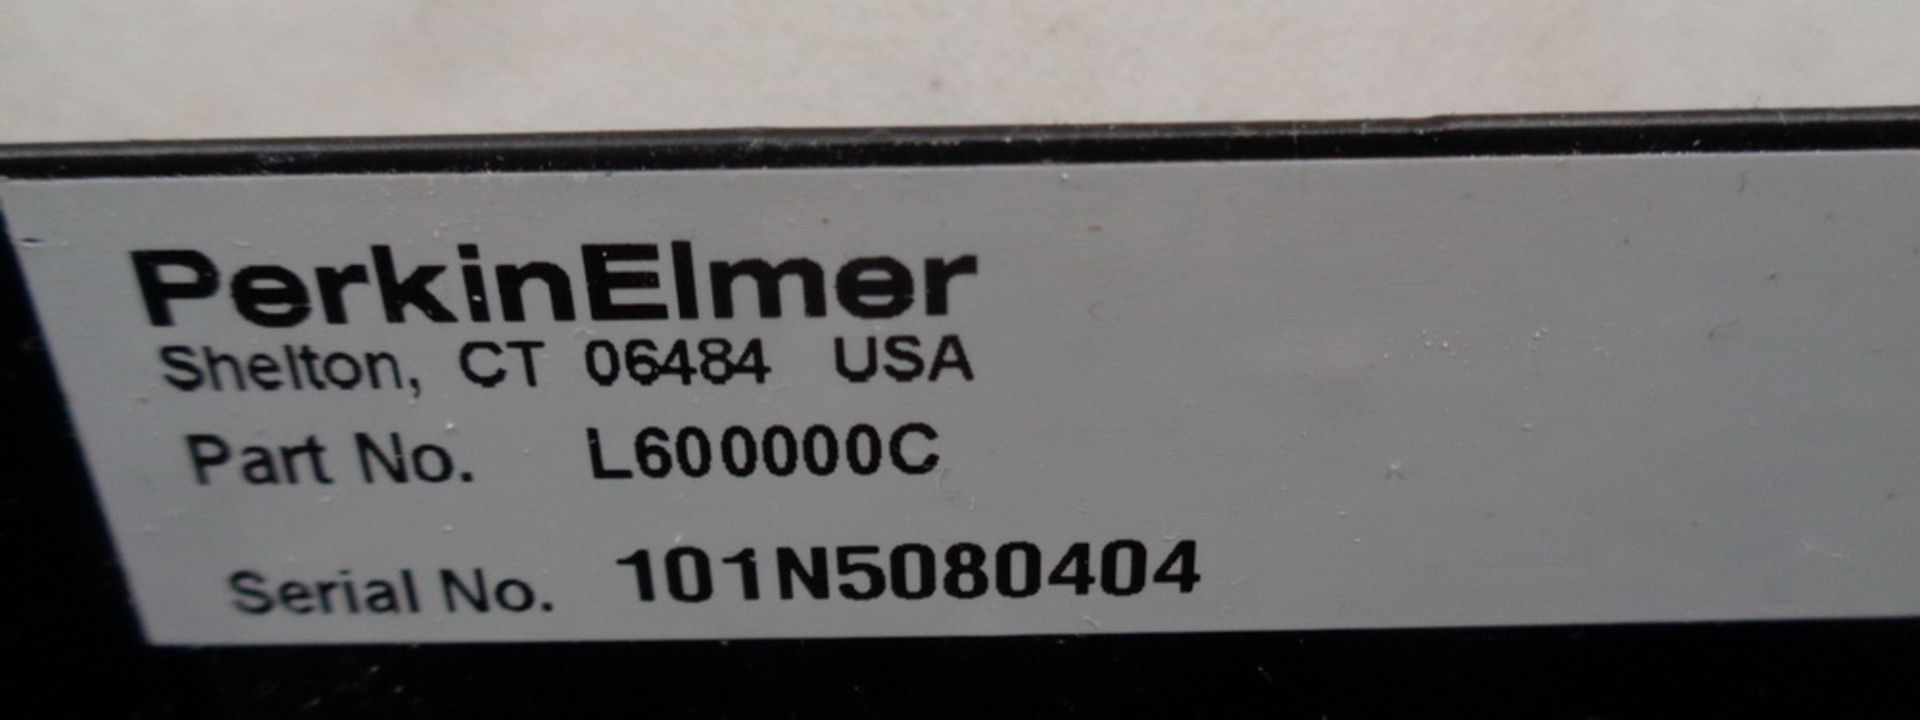 Perkin Elmer UV/VIS Spectrometer, Lambda 35 - Image 4 of 6